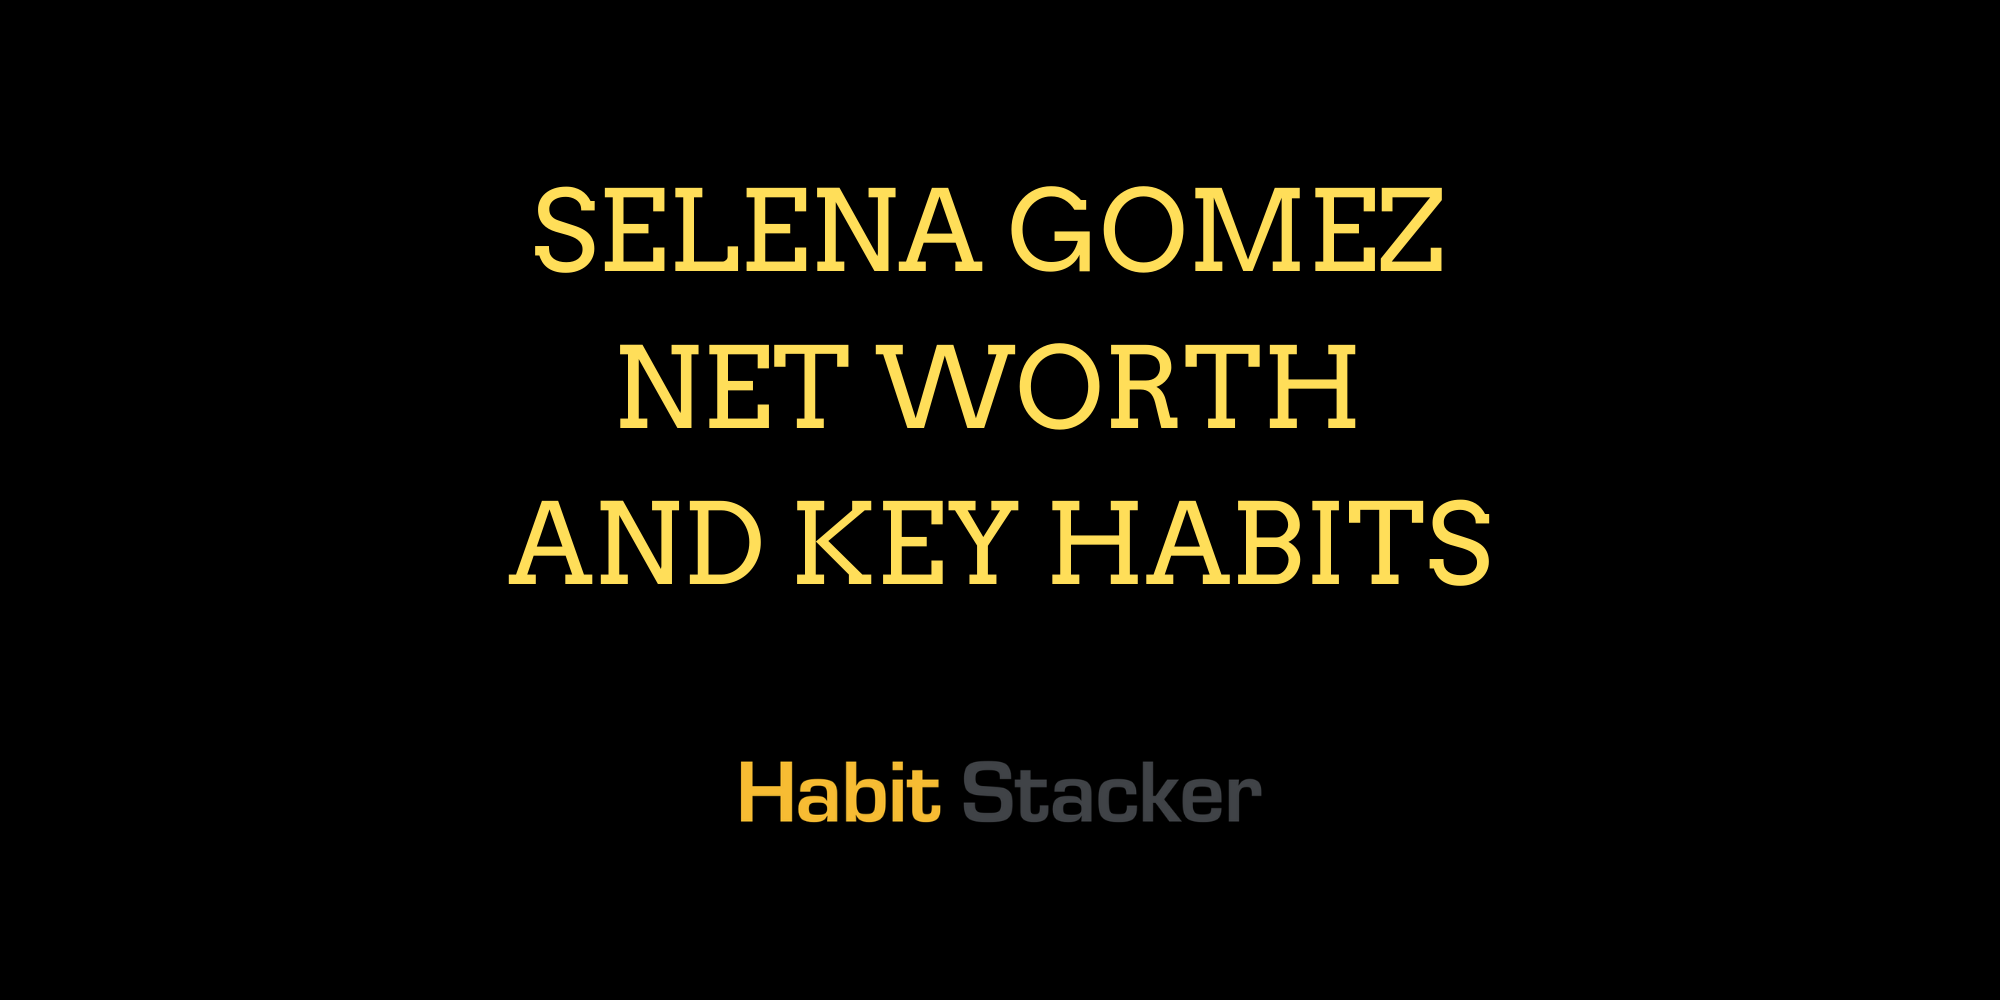 Selena Gomez Net Worth and Key Habits